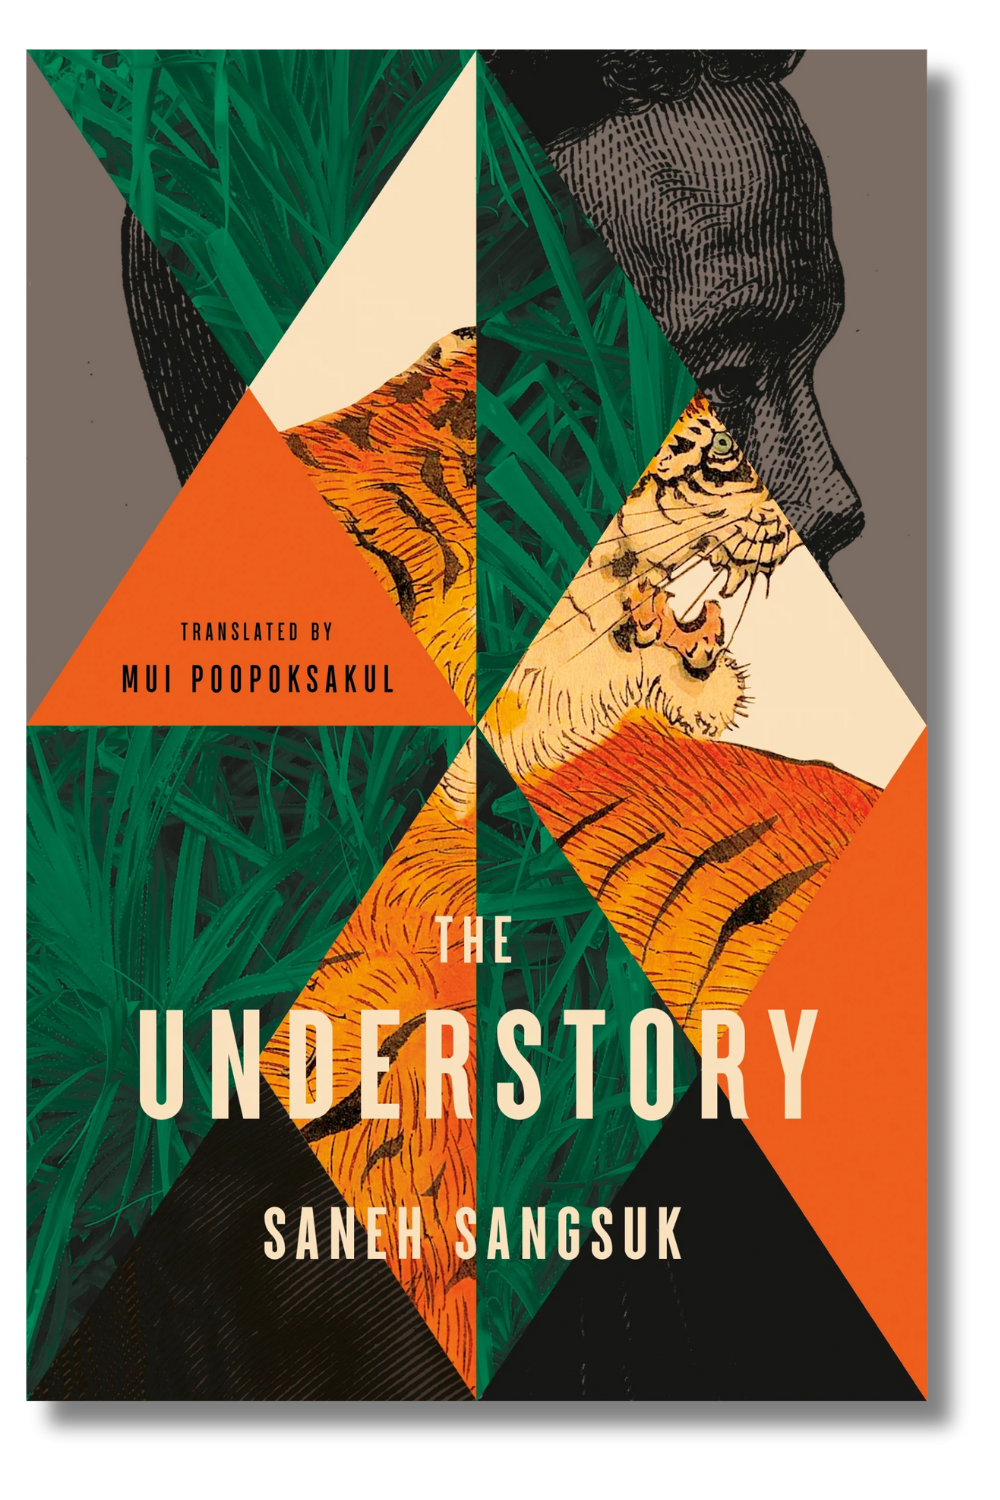 The cover of "The Understory" by Saneh Sangsuk, tr. by Mui Poopoksakul